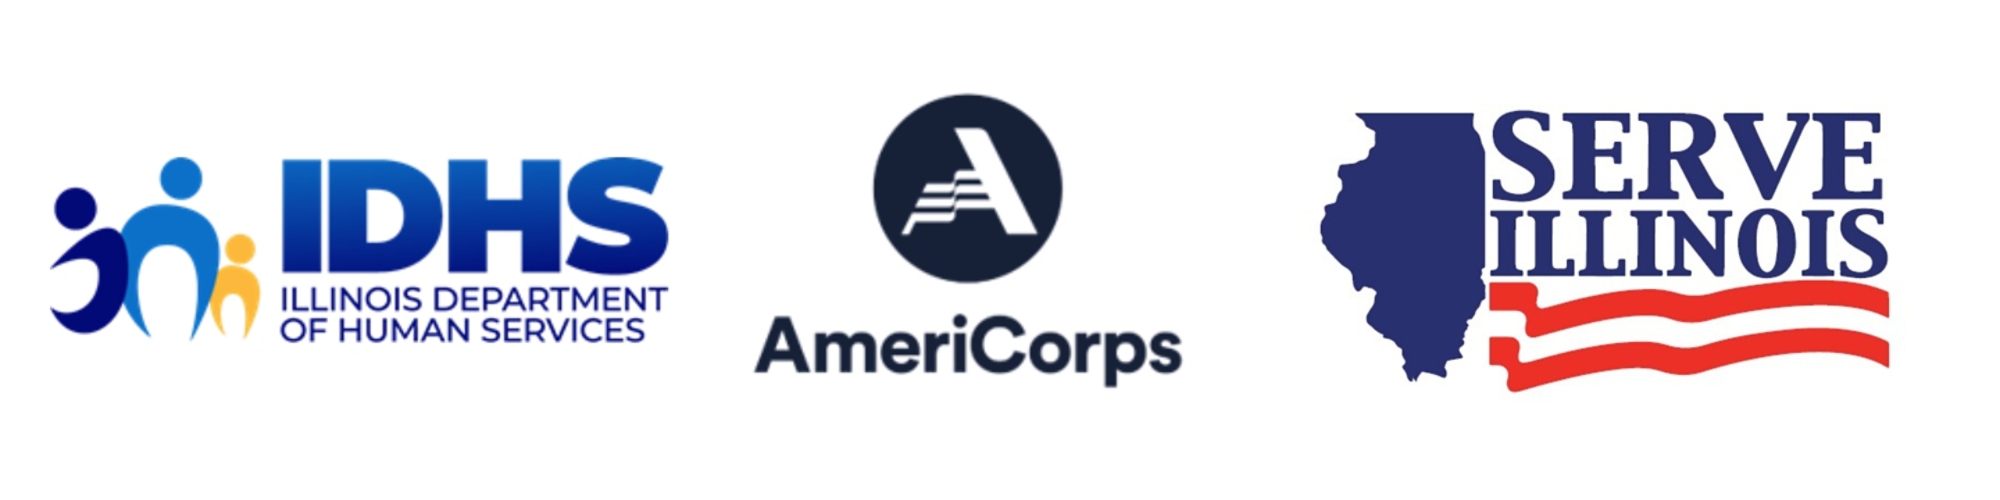 IDHS, Serve Illinois, and AmeriCorps logos